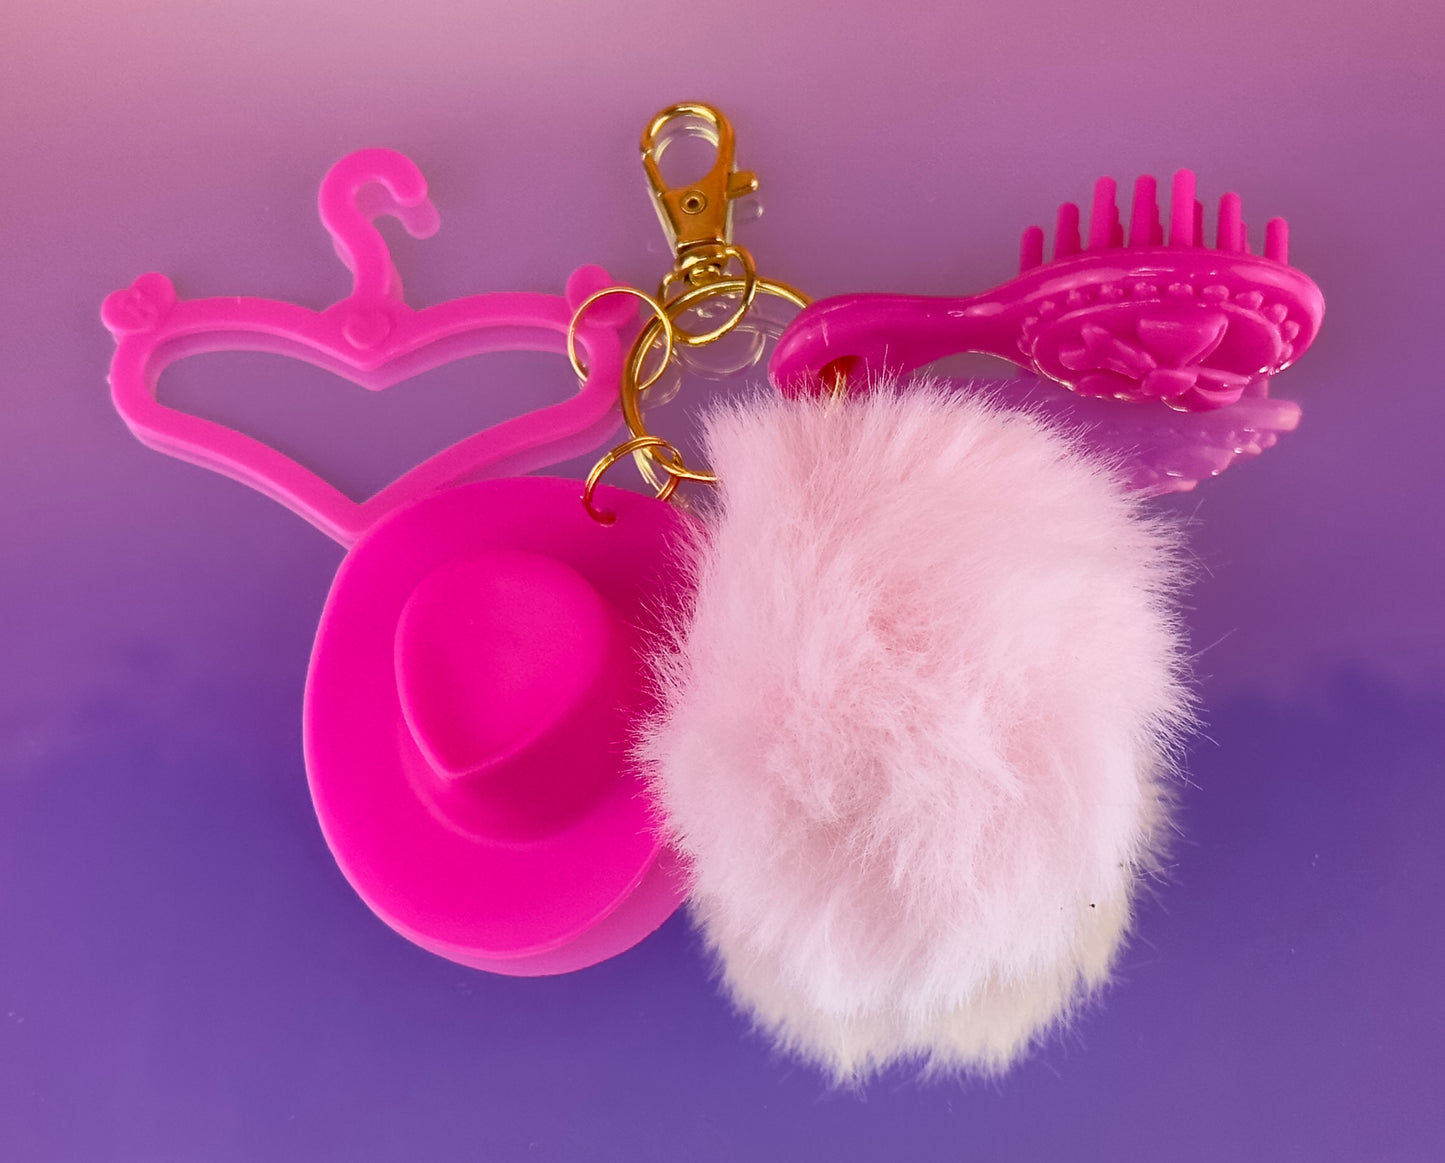 Puff Ball, Coconut Lip Gloss Keychain